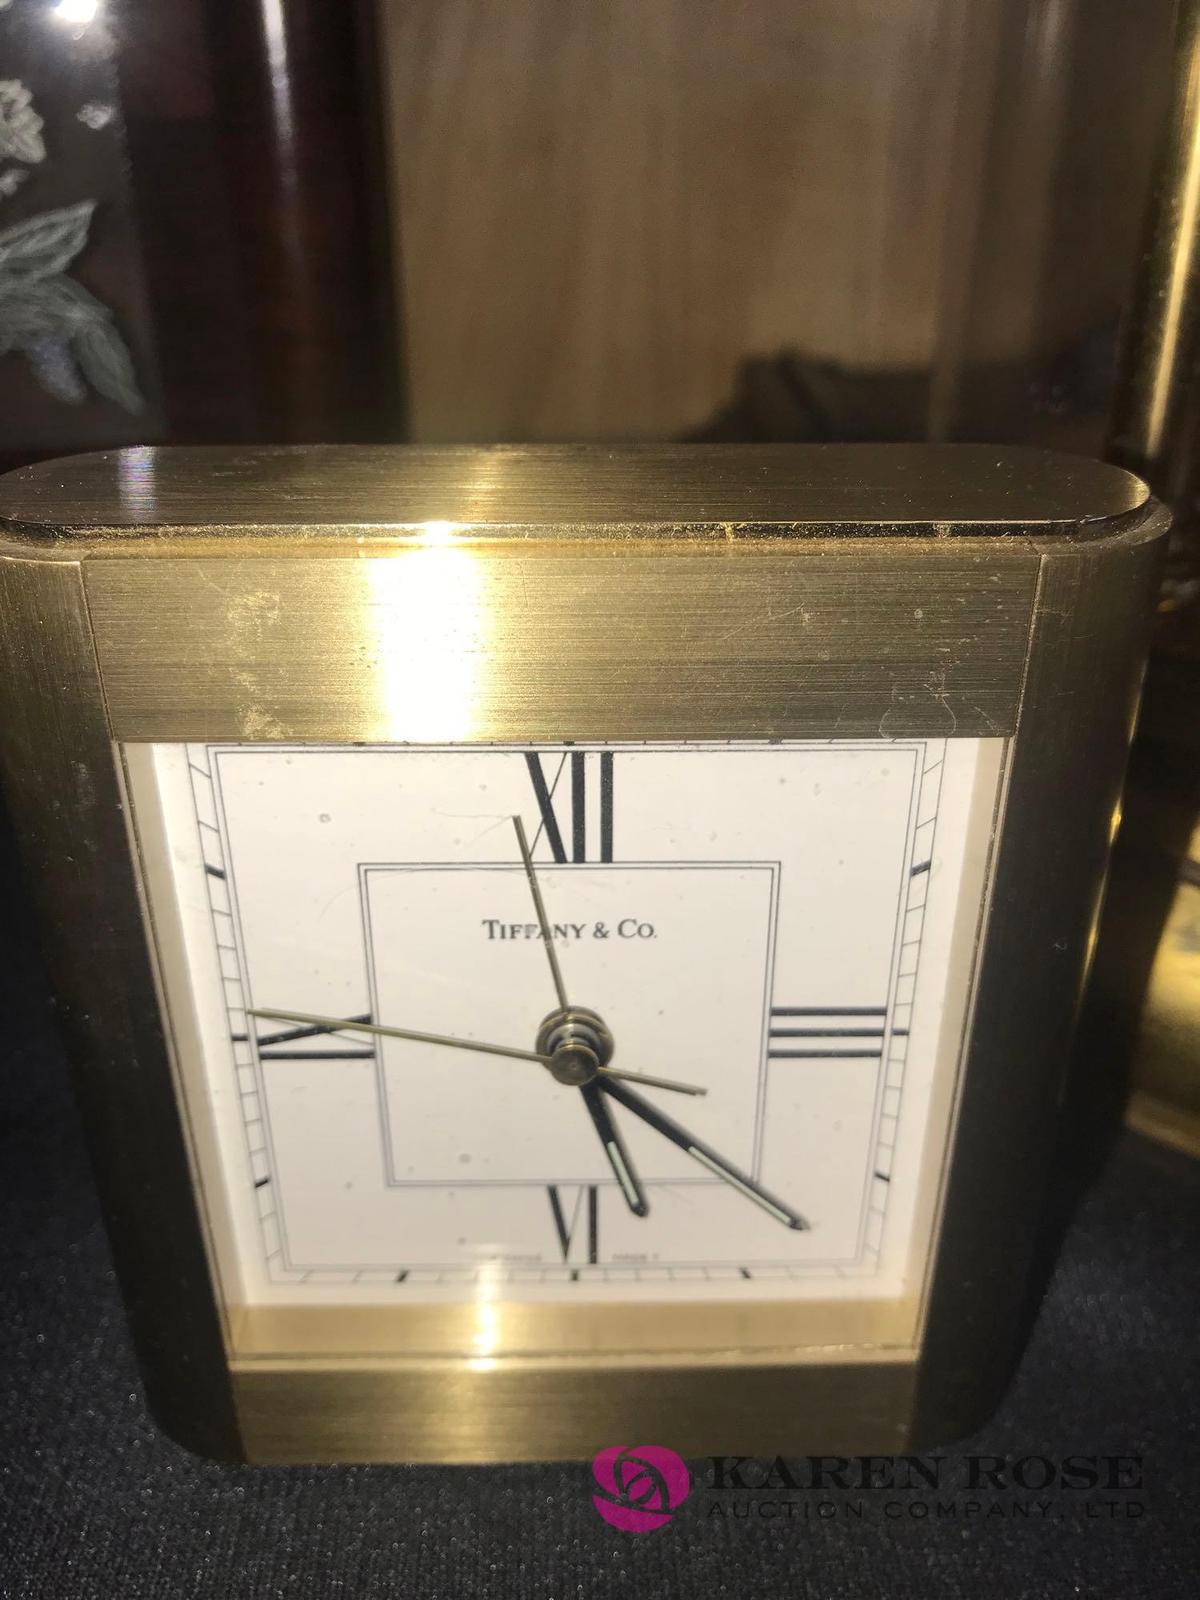 Tiffany & Co. Swiss made Quartz clock